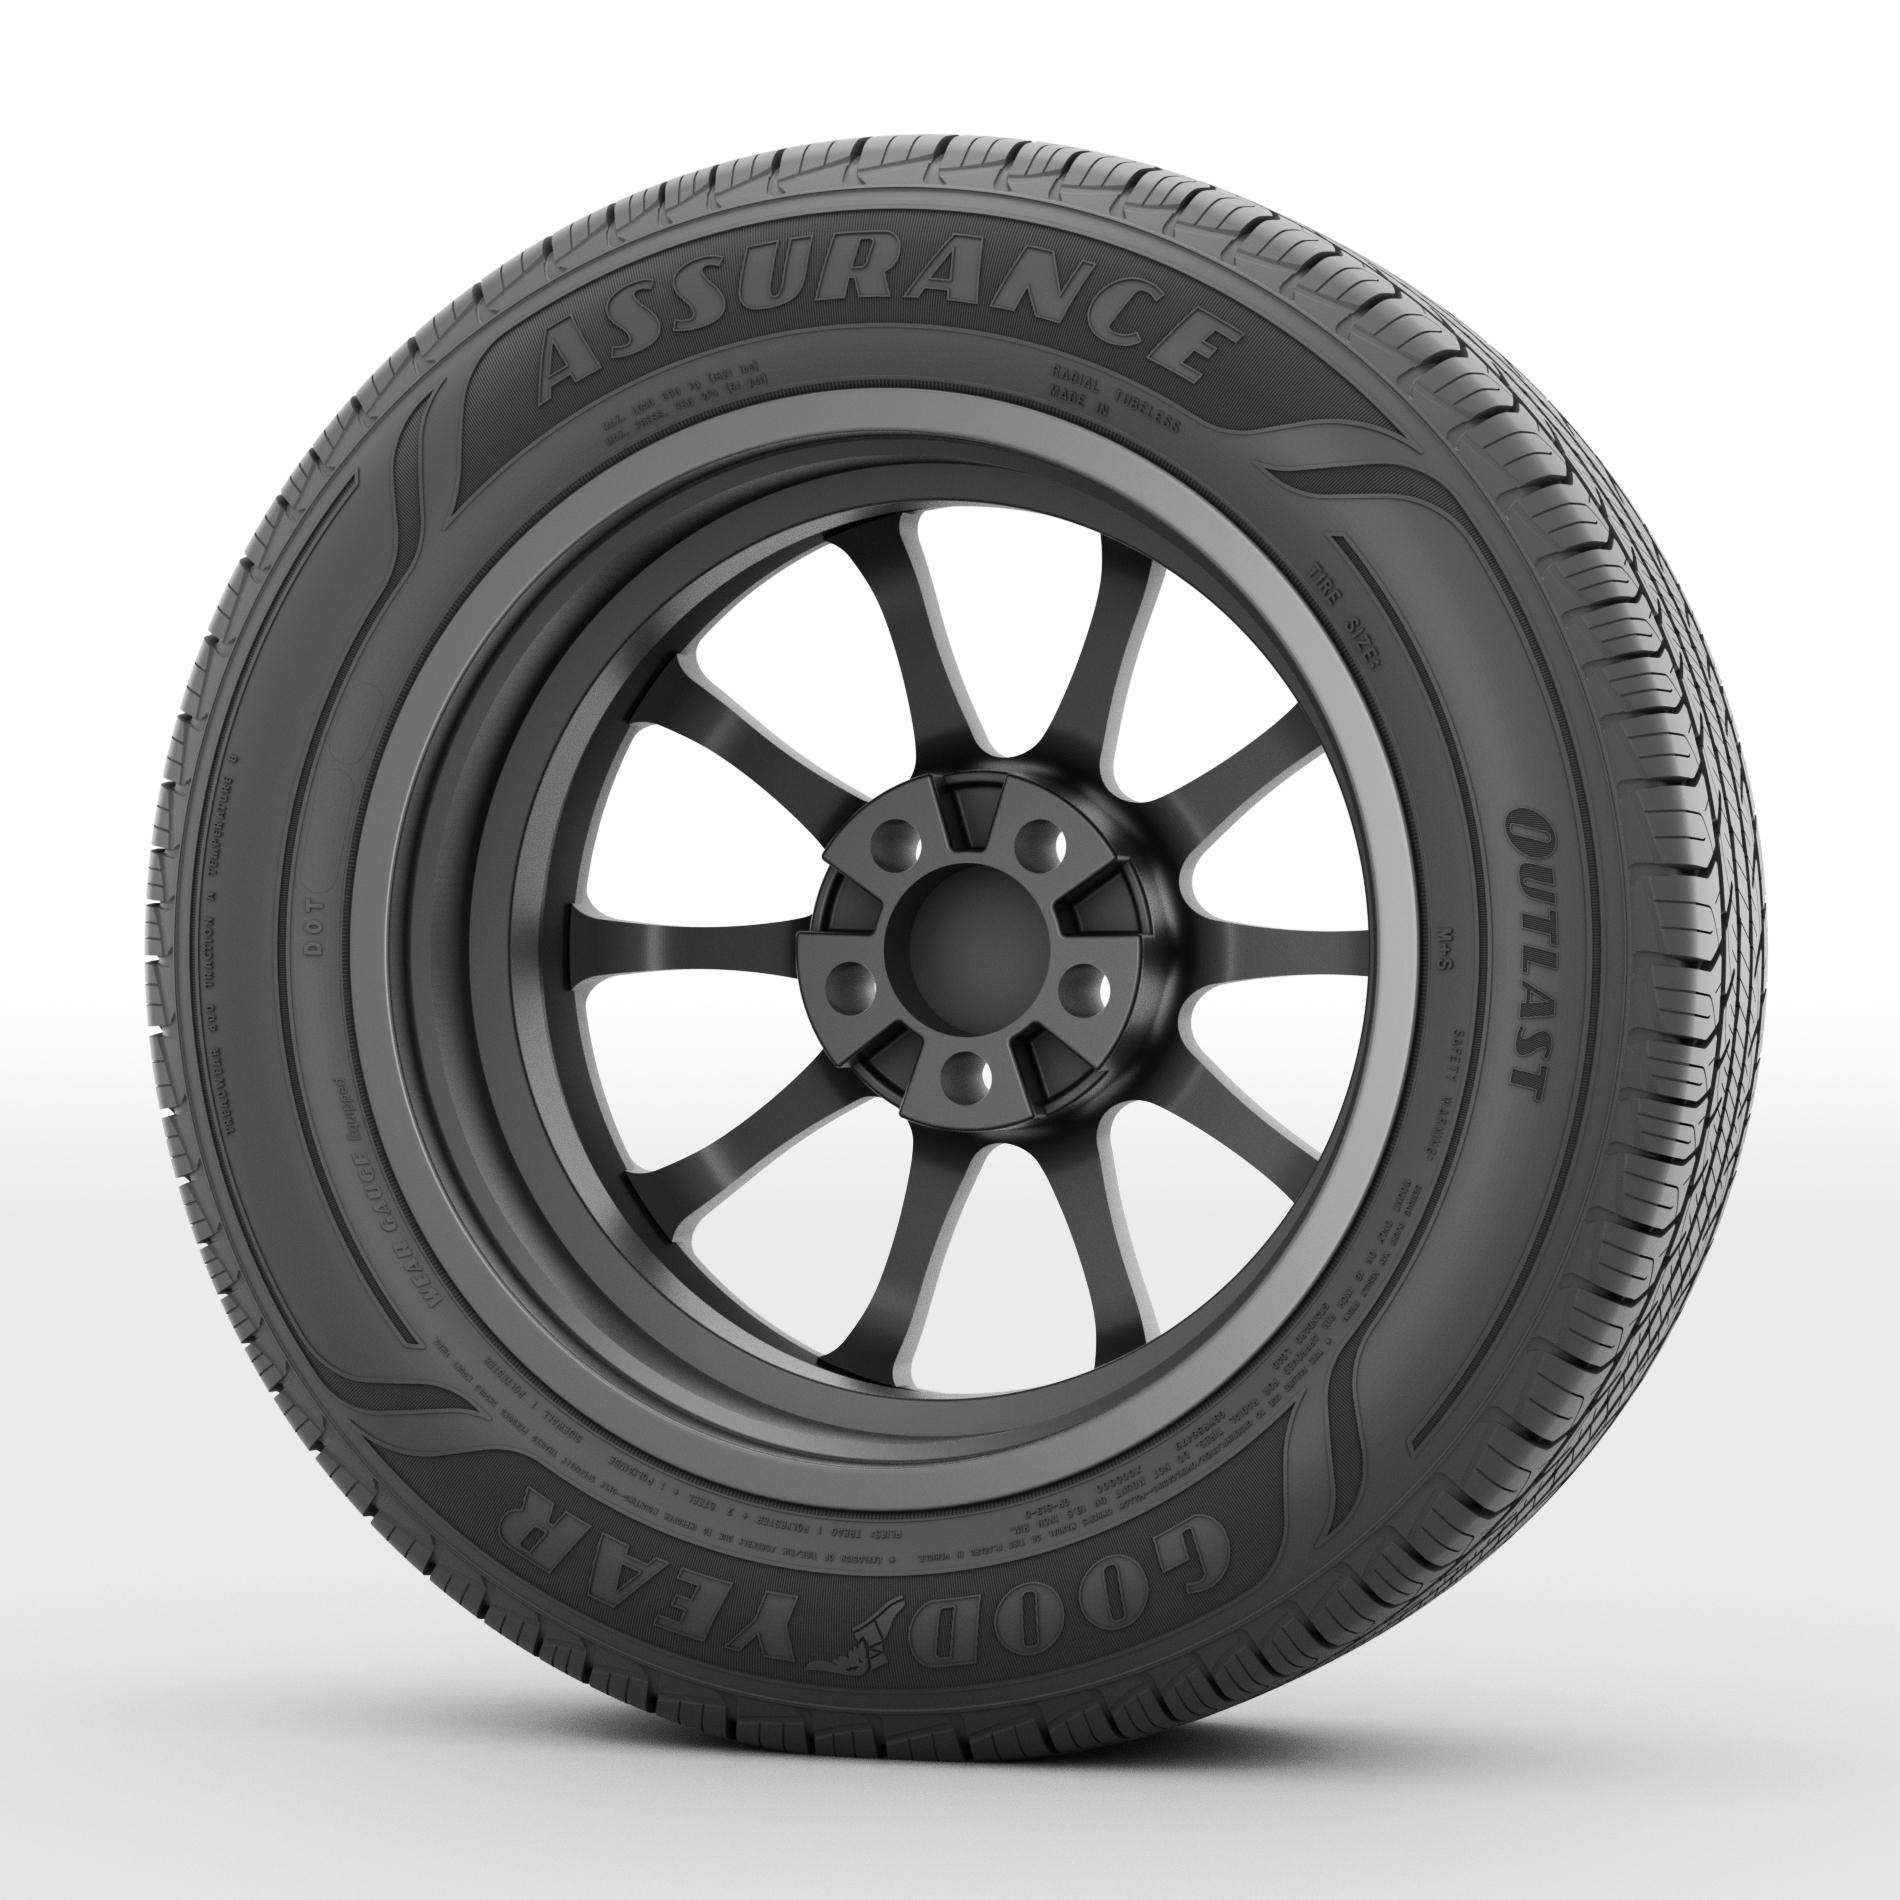 Assurance Outlast 95V All-Season Goodyear Tire 215/60R16